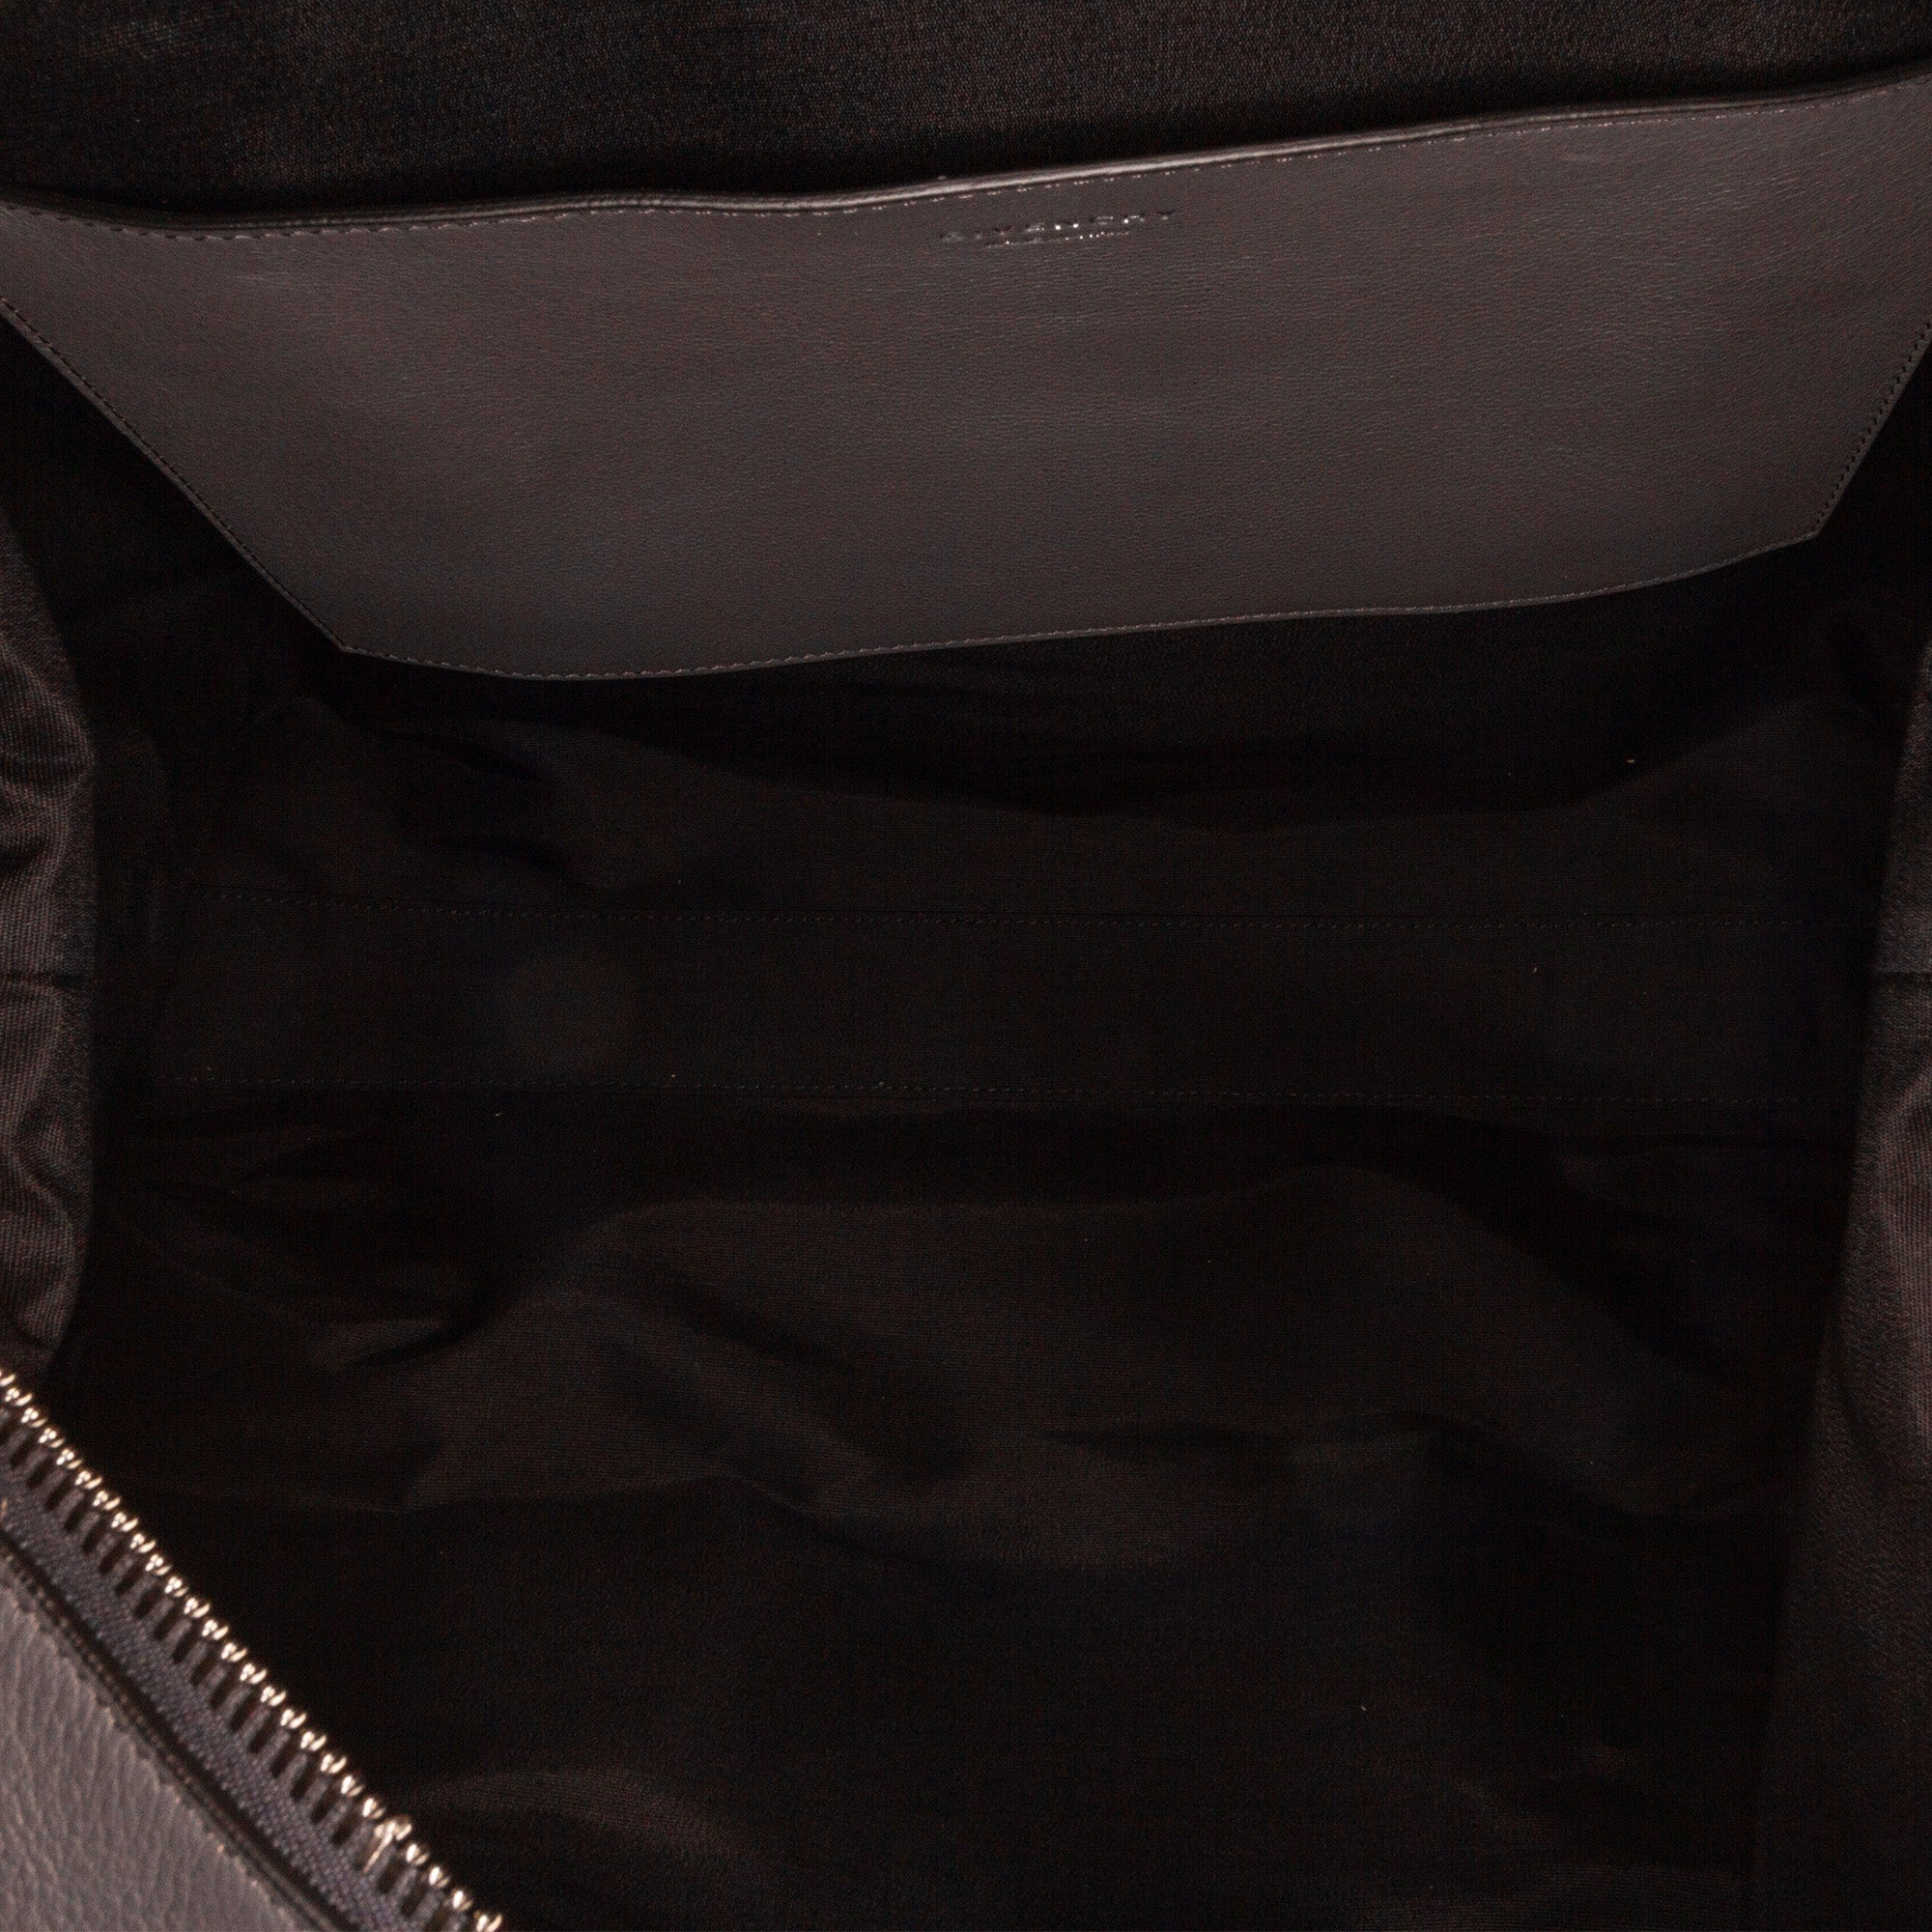 Totes bags Givenchy - Antigona Soft large bag - BB50F0B0WD001